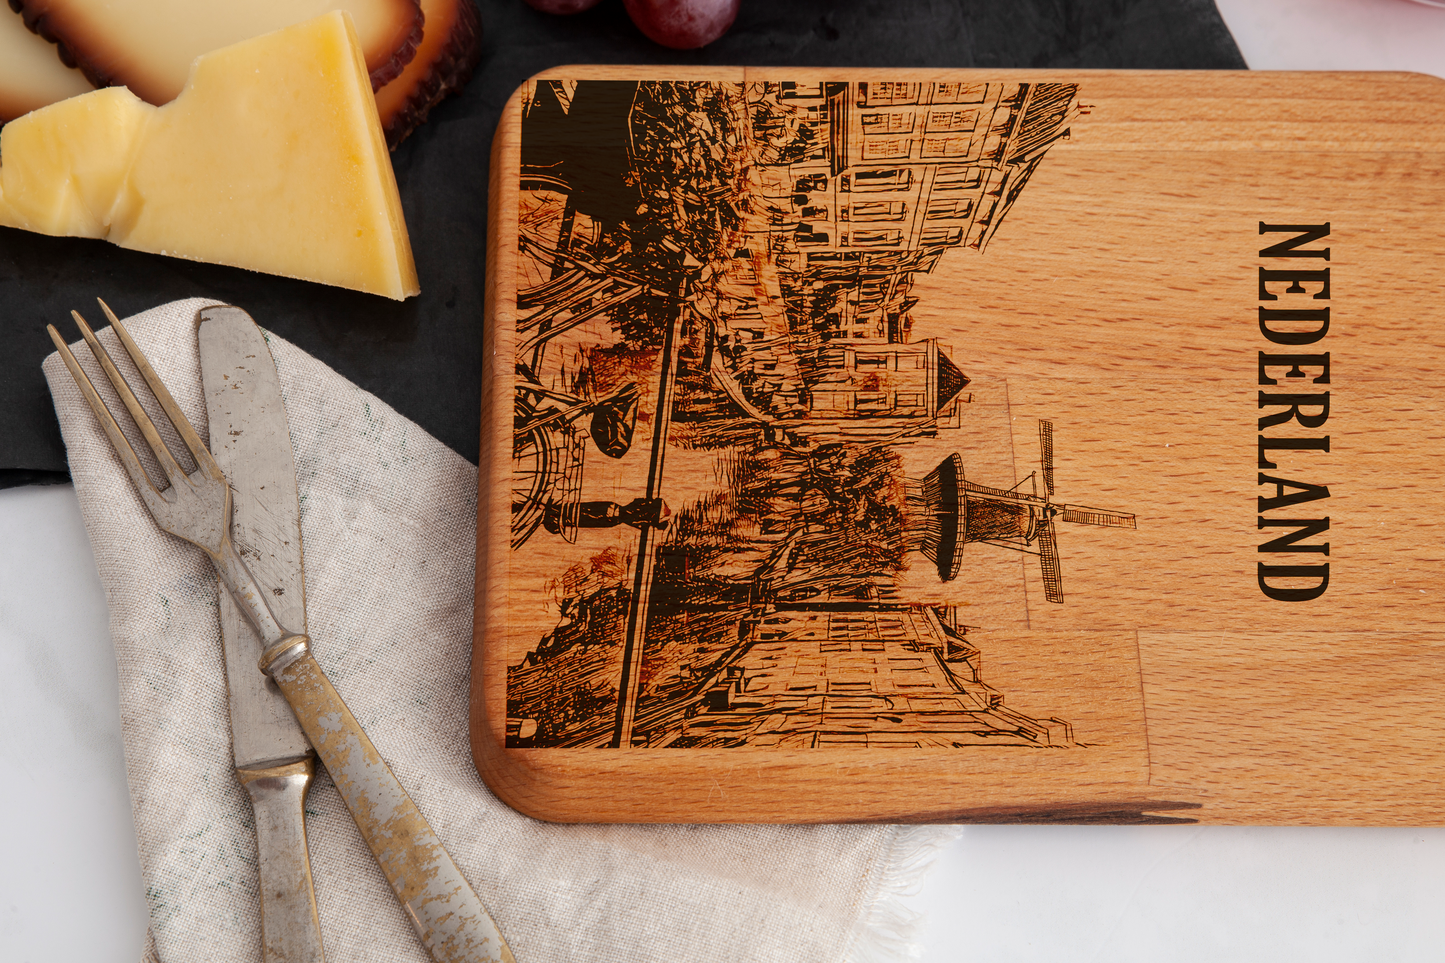 Nederland, City View, cheese board, wood grain